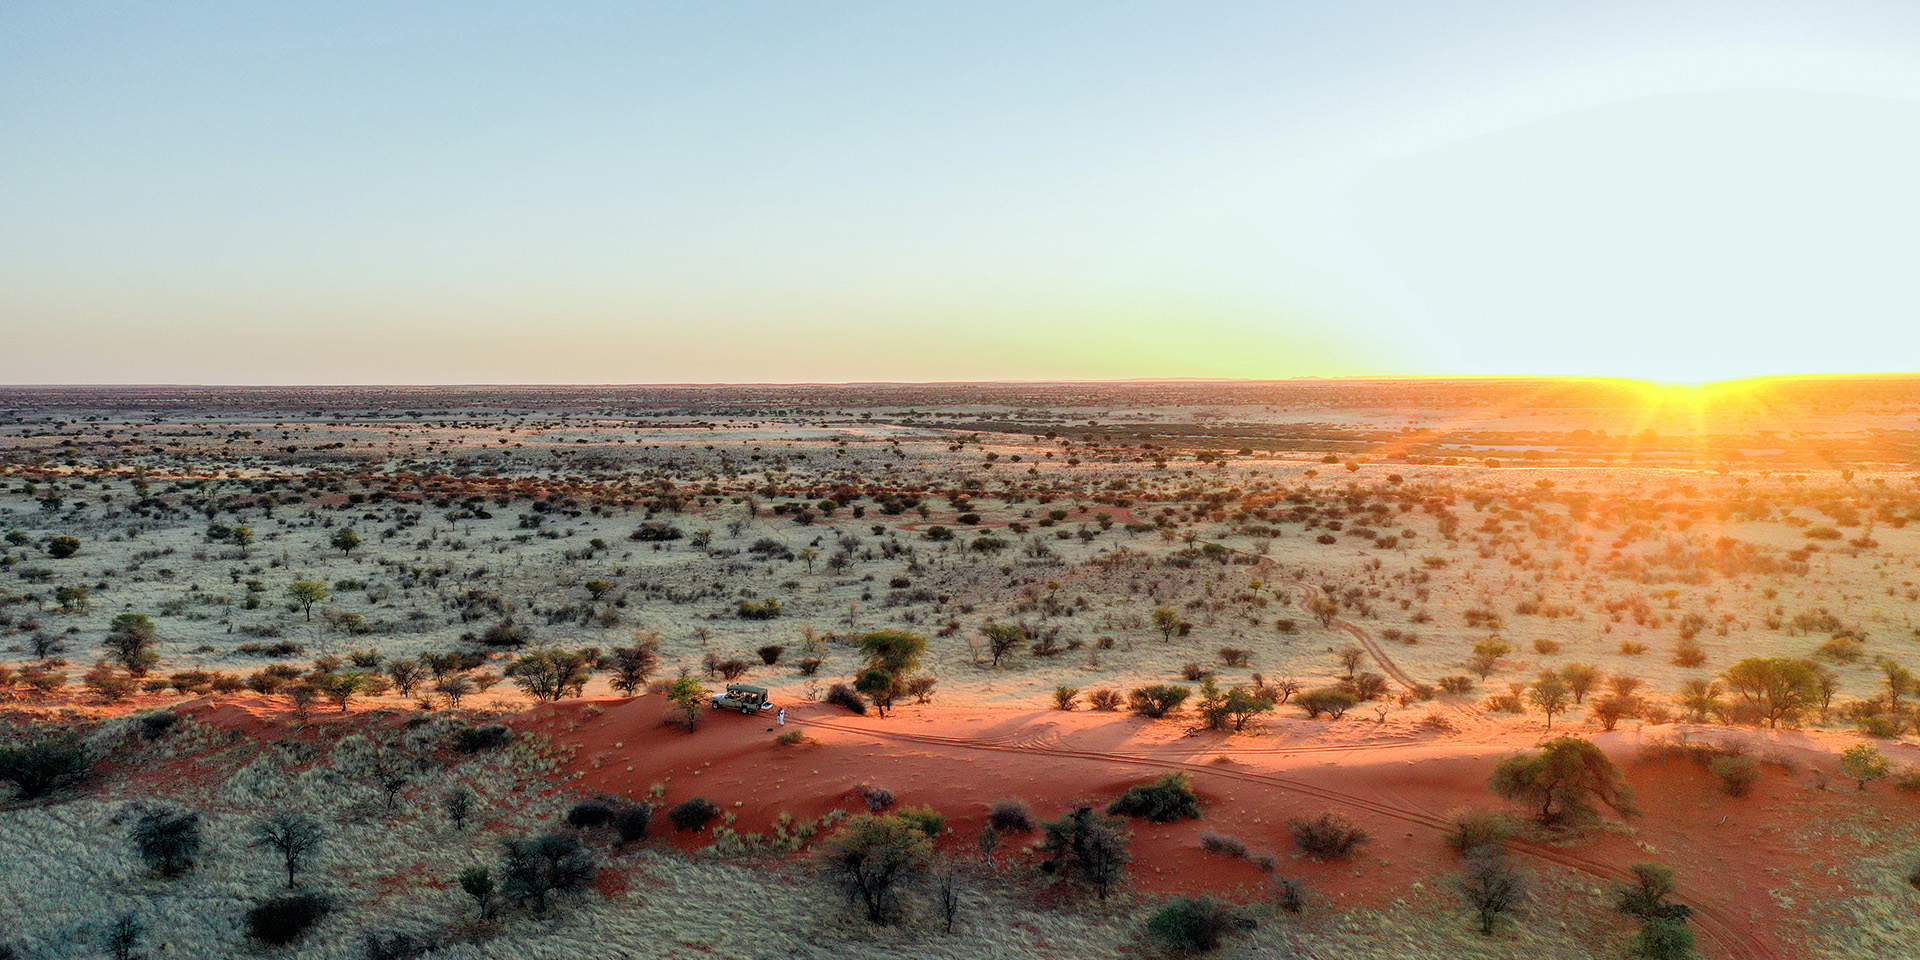 Sunset in the Kalahari, Namibia